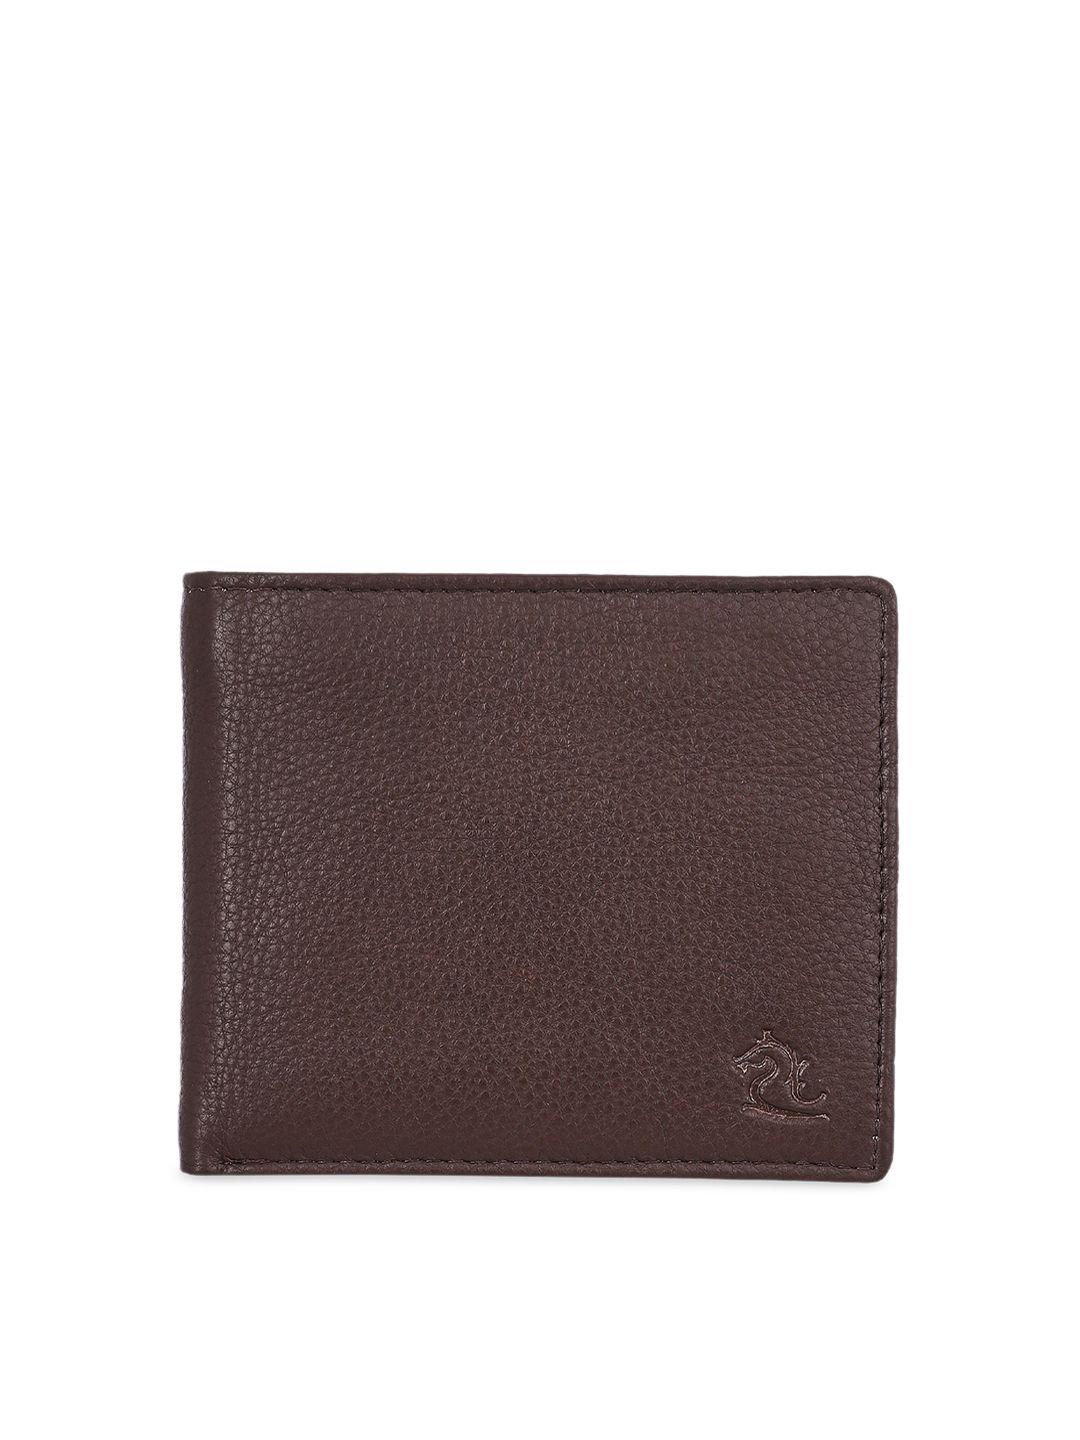 kara men tan brown solid leather two fold wallet